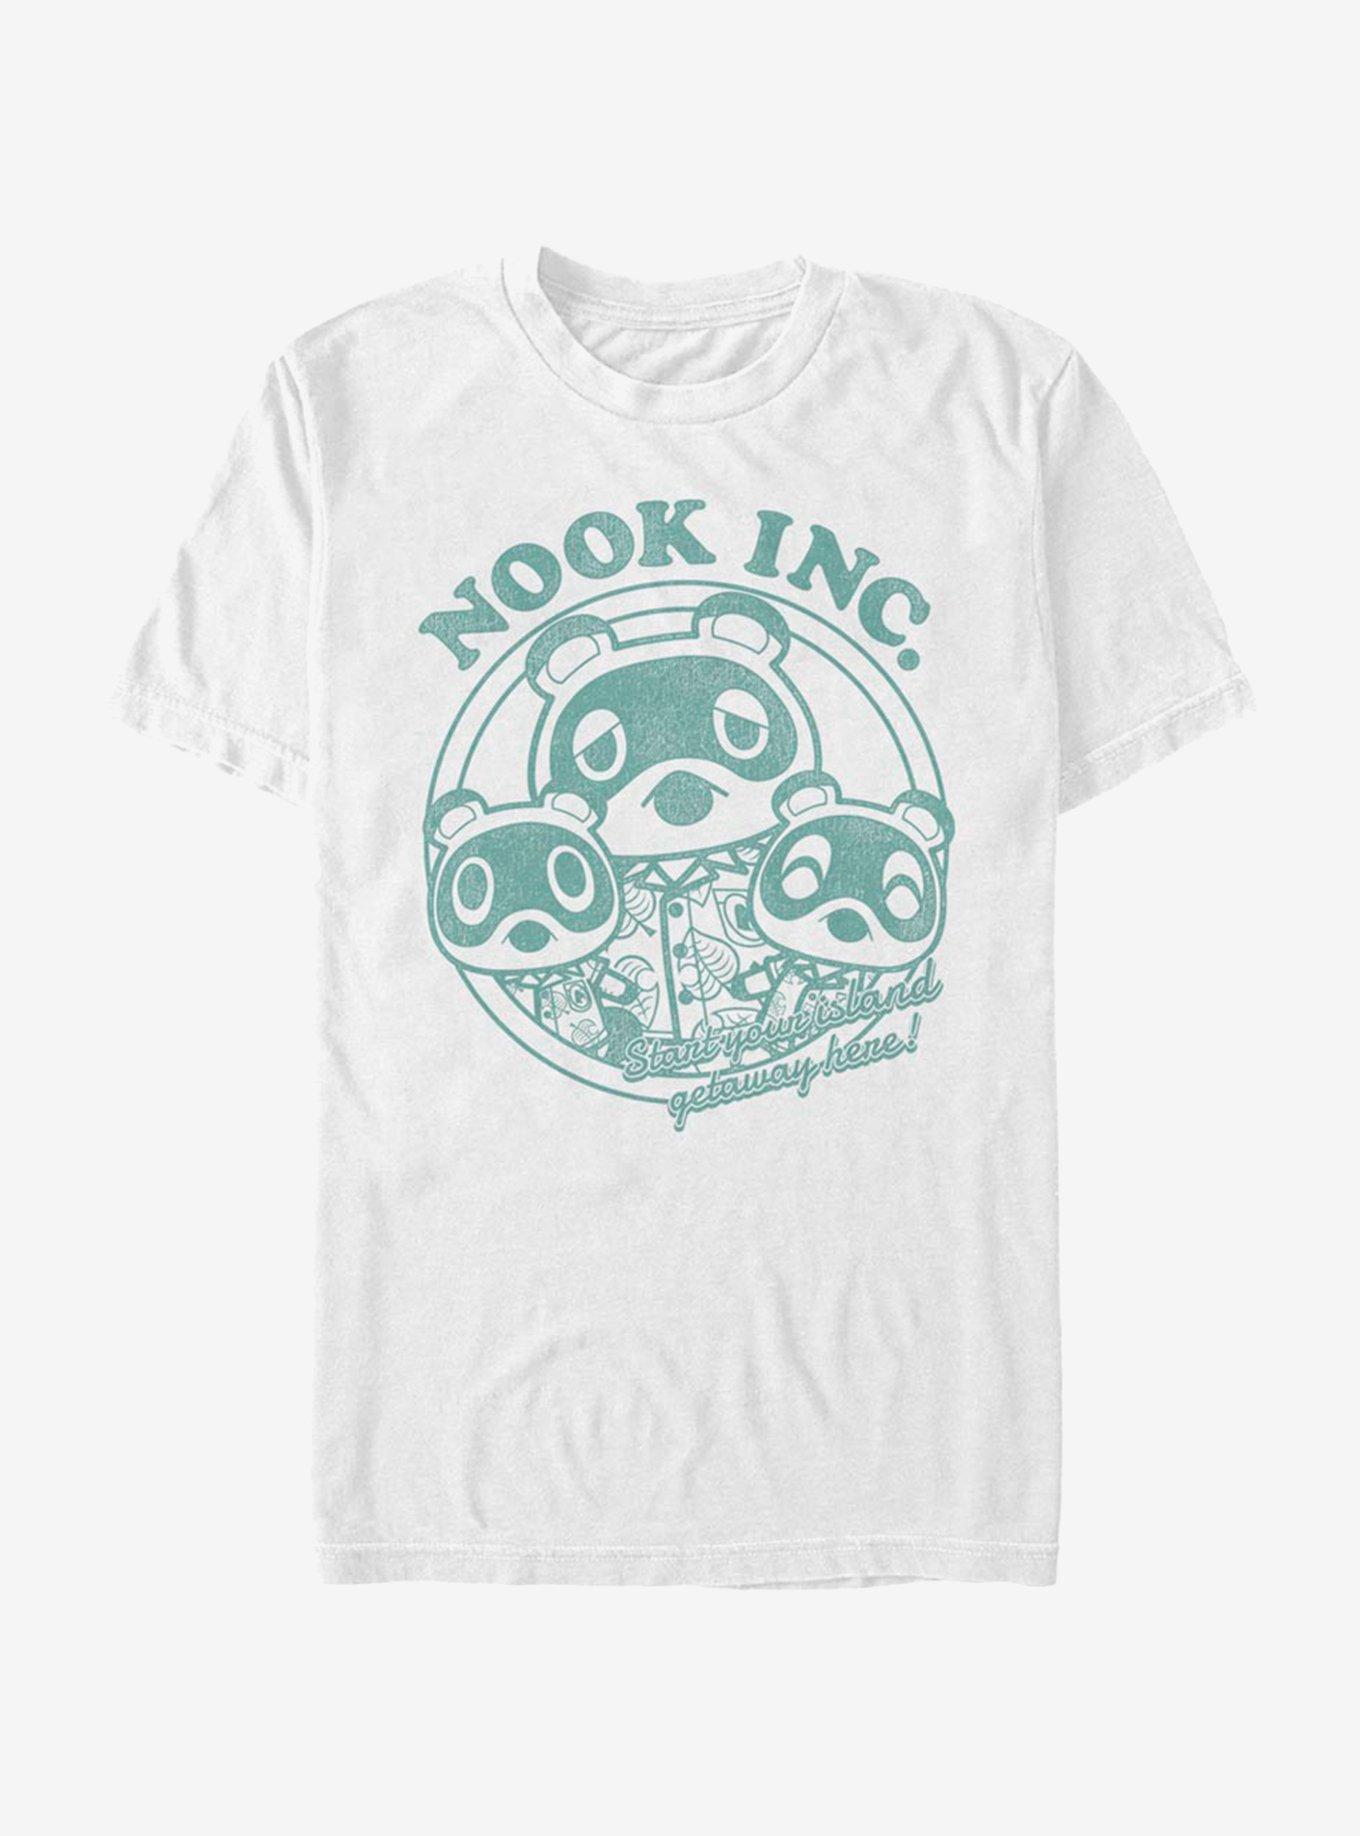 Animal Crossing Nook Inc. Getaway T-Shirt, WHITE, hi-res